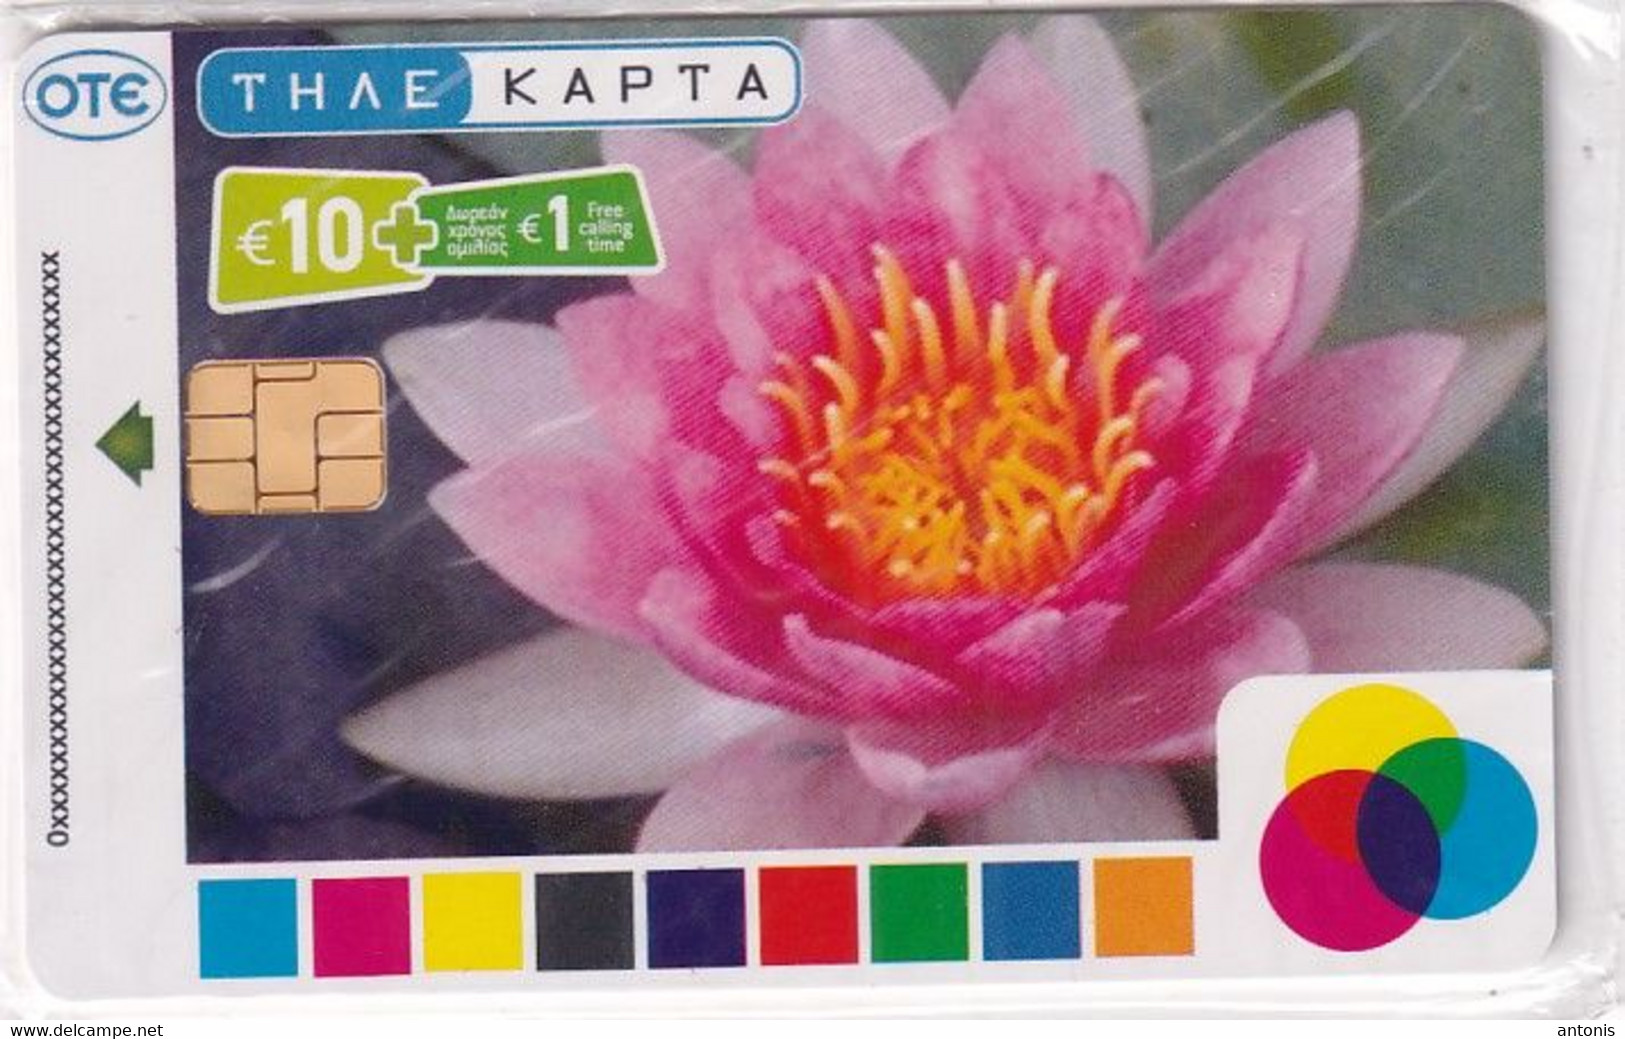 GREECE - Flower, HSCC Test Card 10+1 Euro, Tirage 100, Mint - Greece